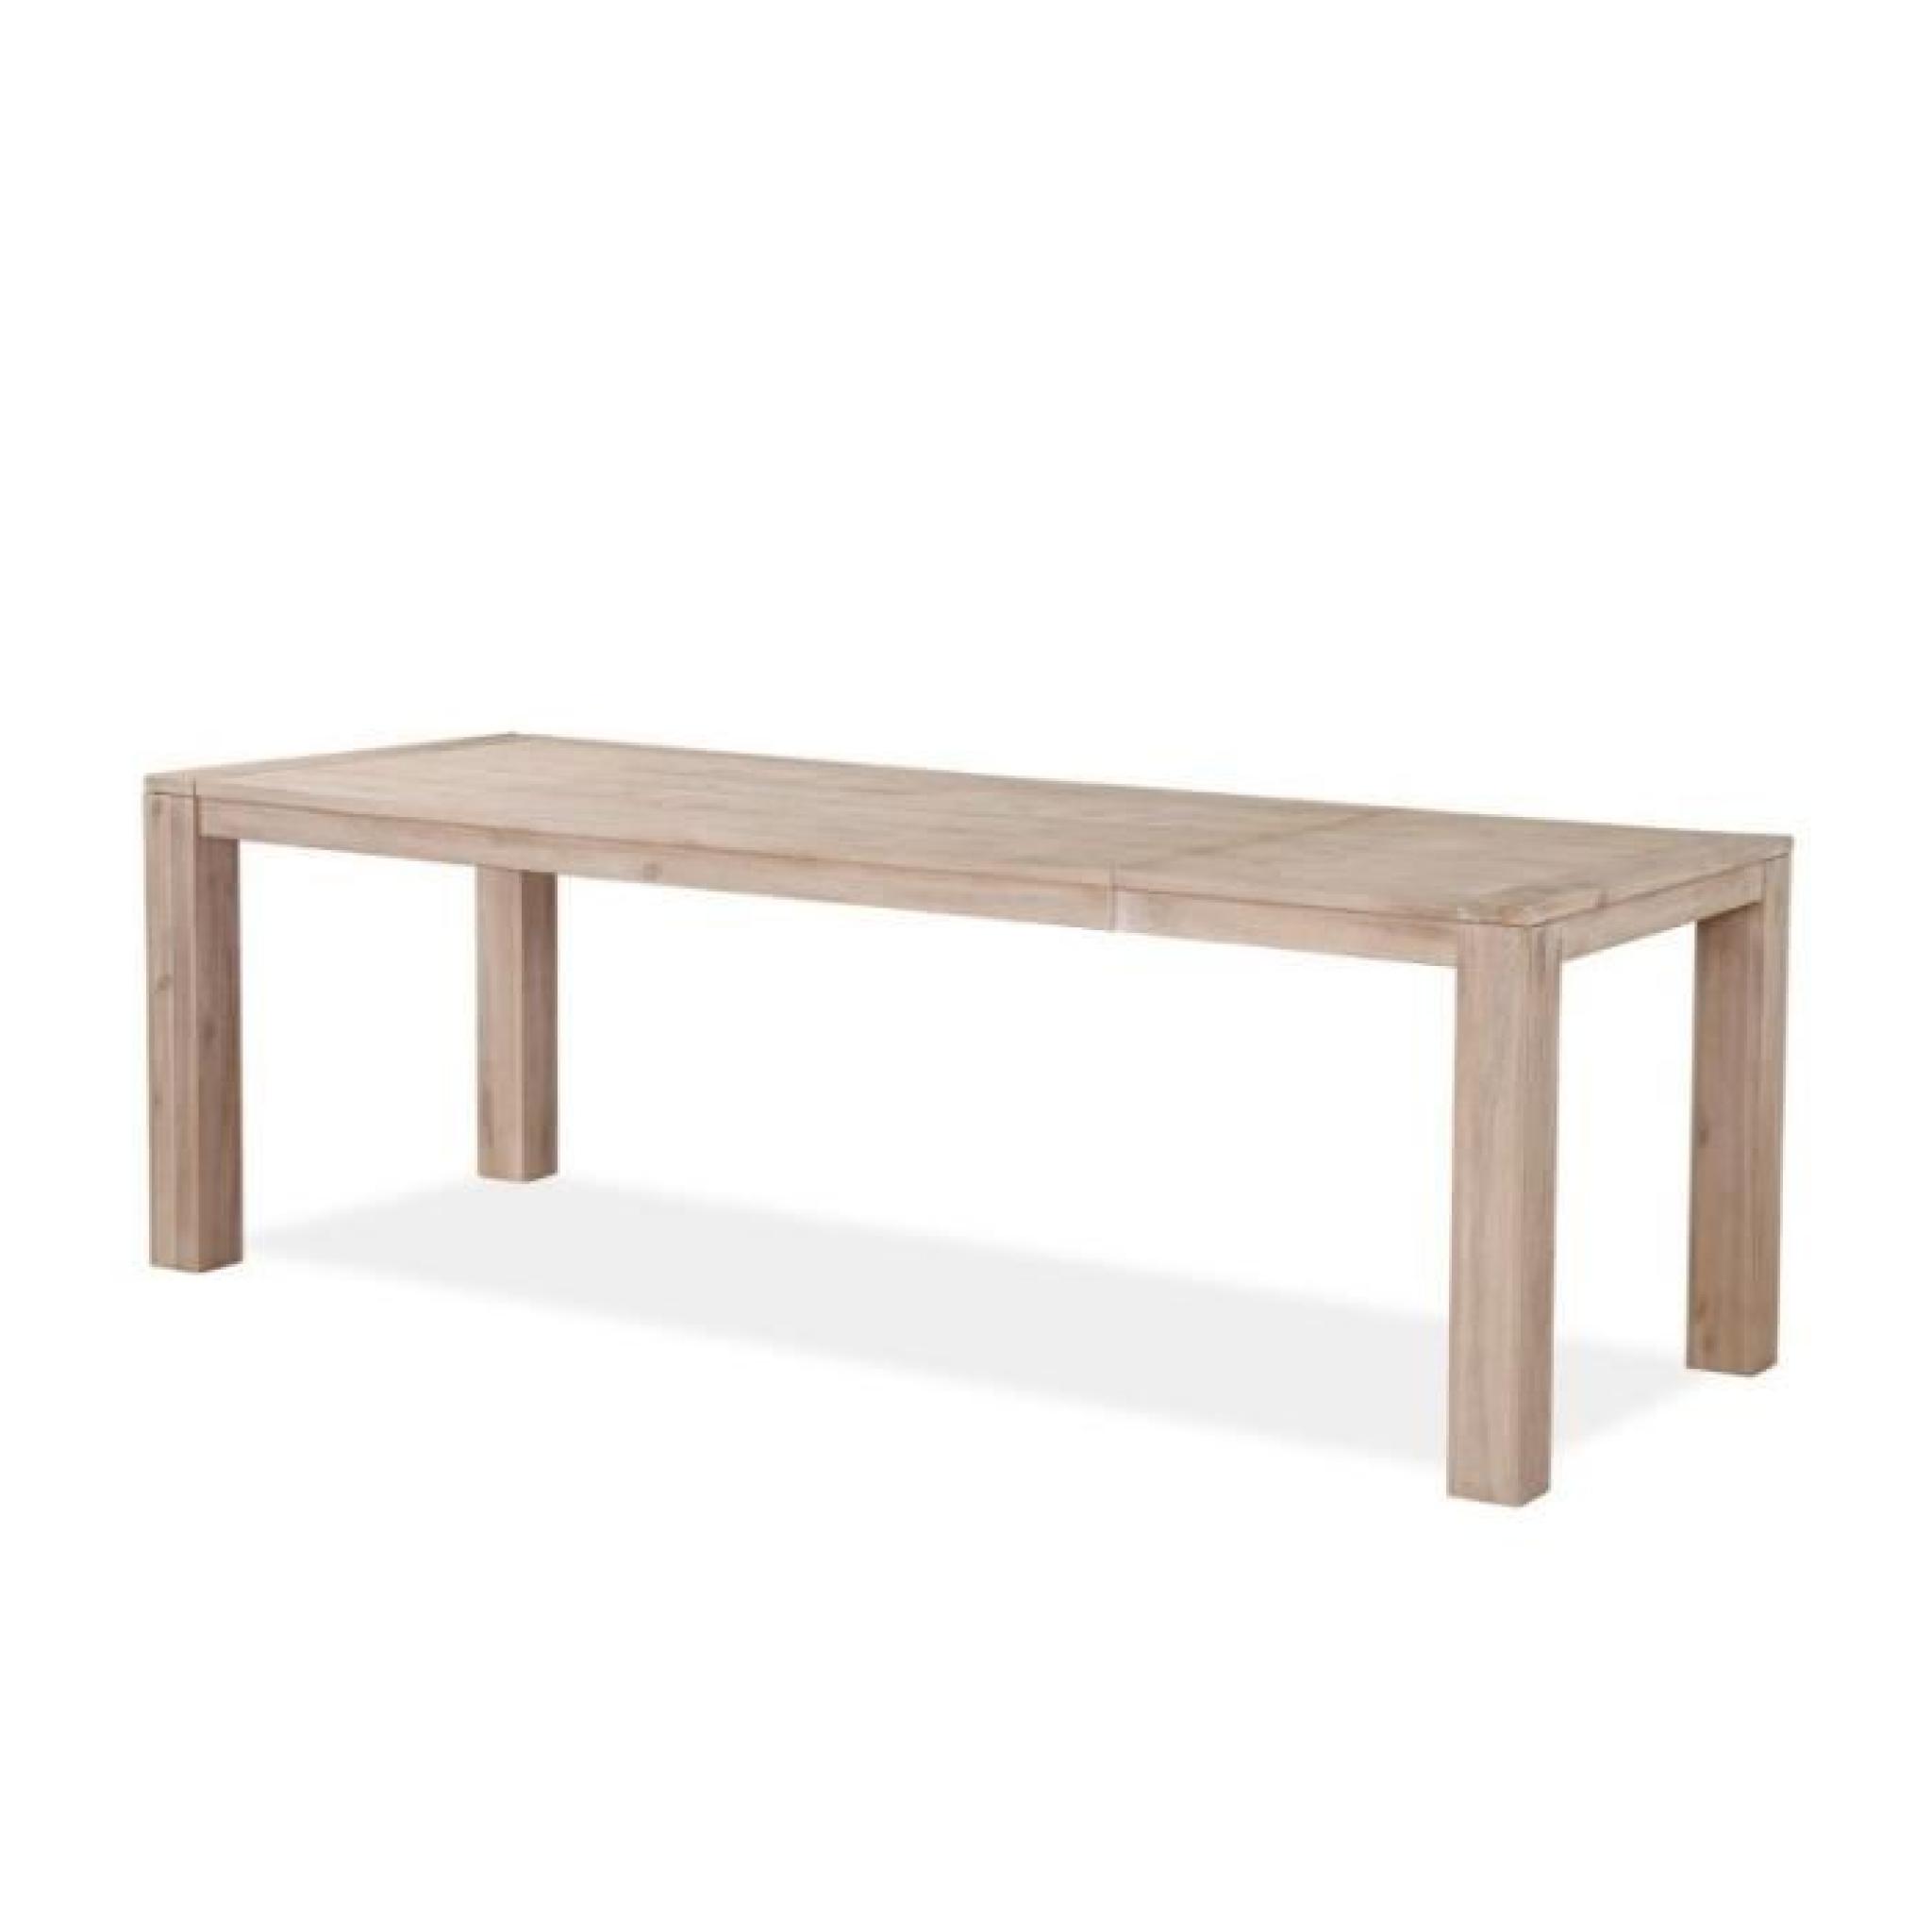 Texas - Table Repas 180 (230) x 90cm extensible bois accacia massif